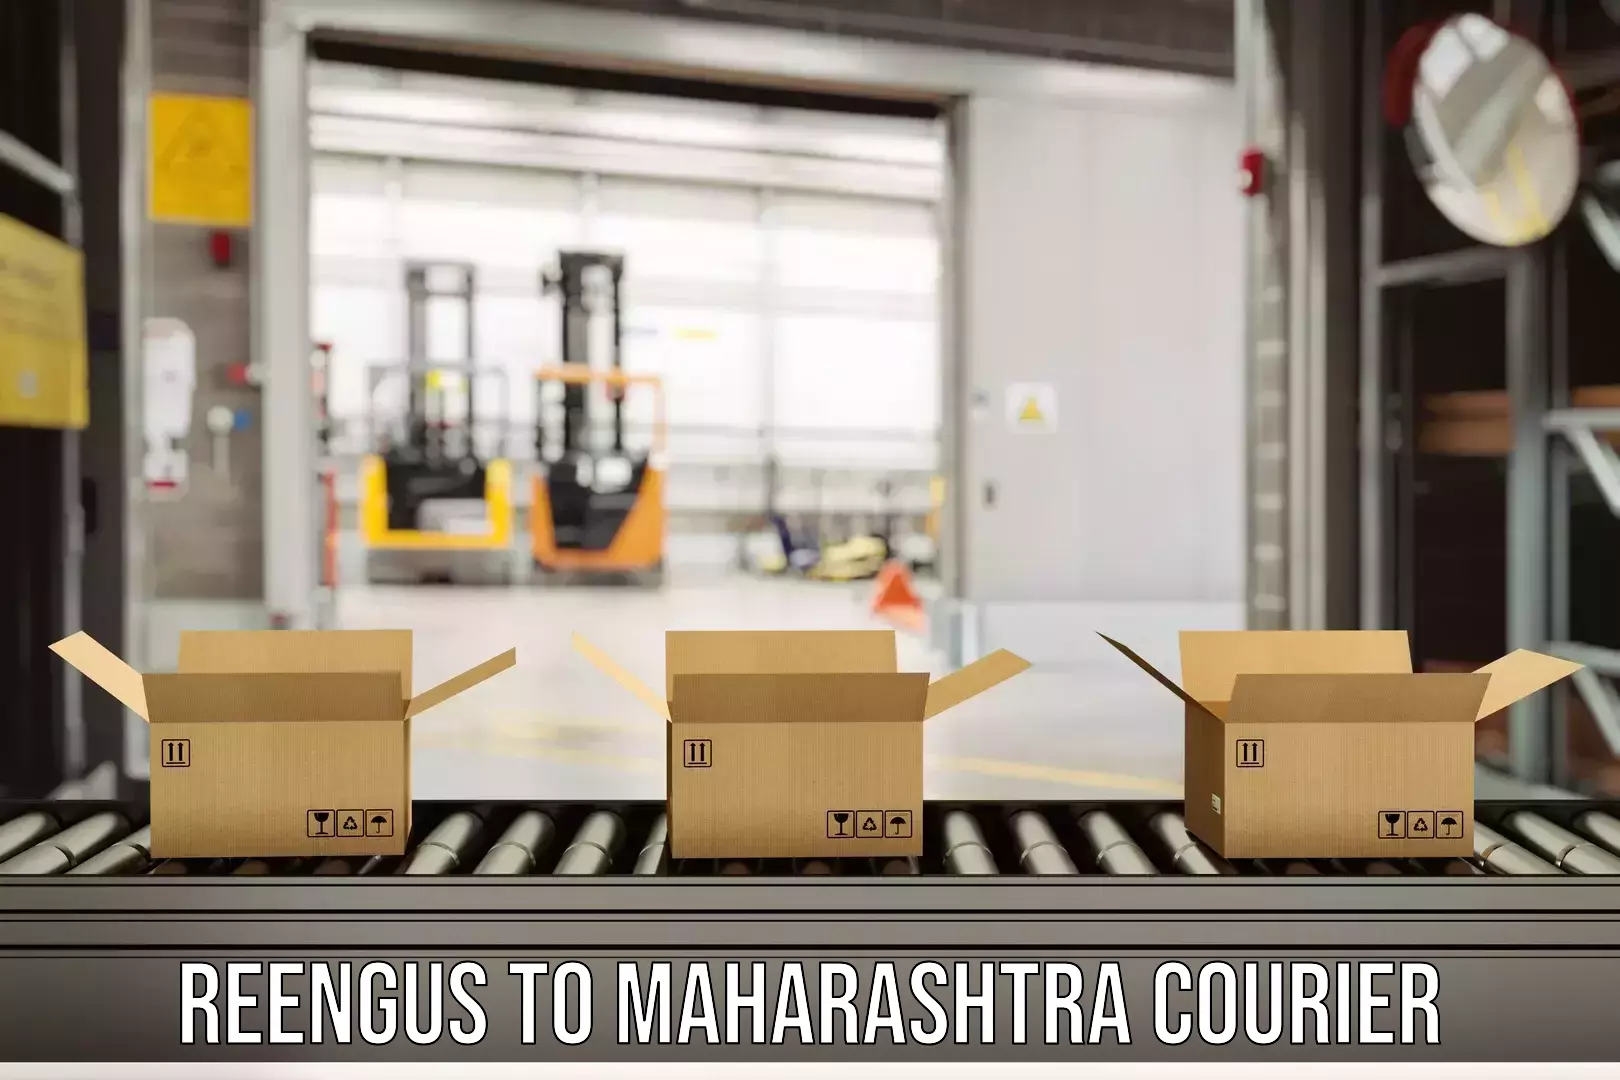 Courier service partnerships Reengus to Vaijapur